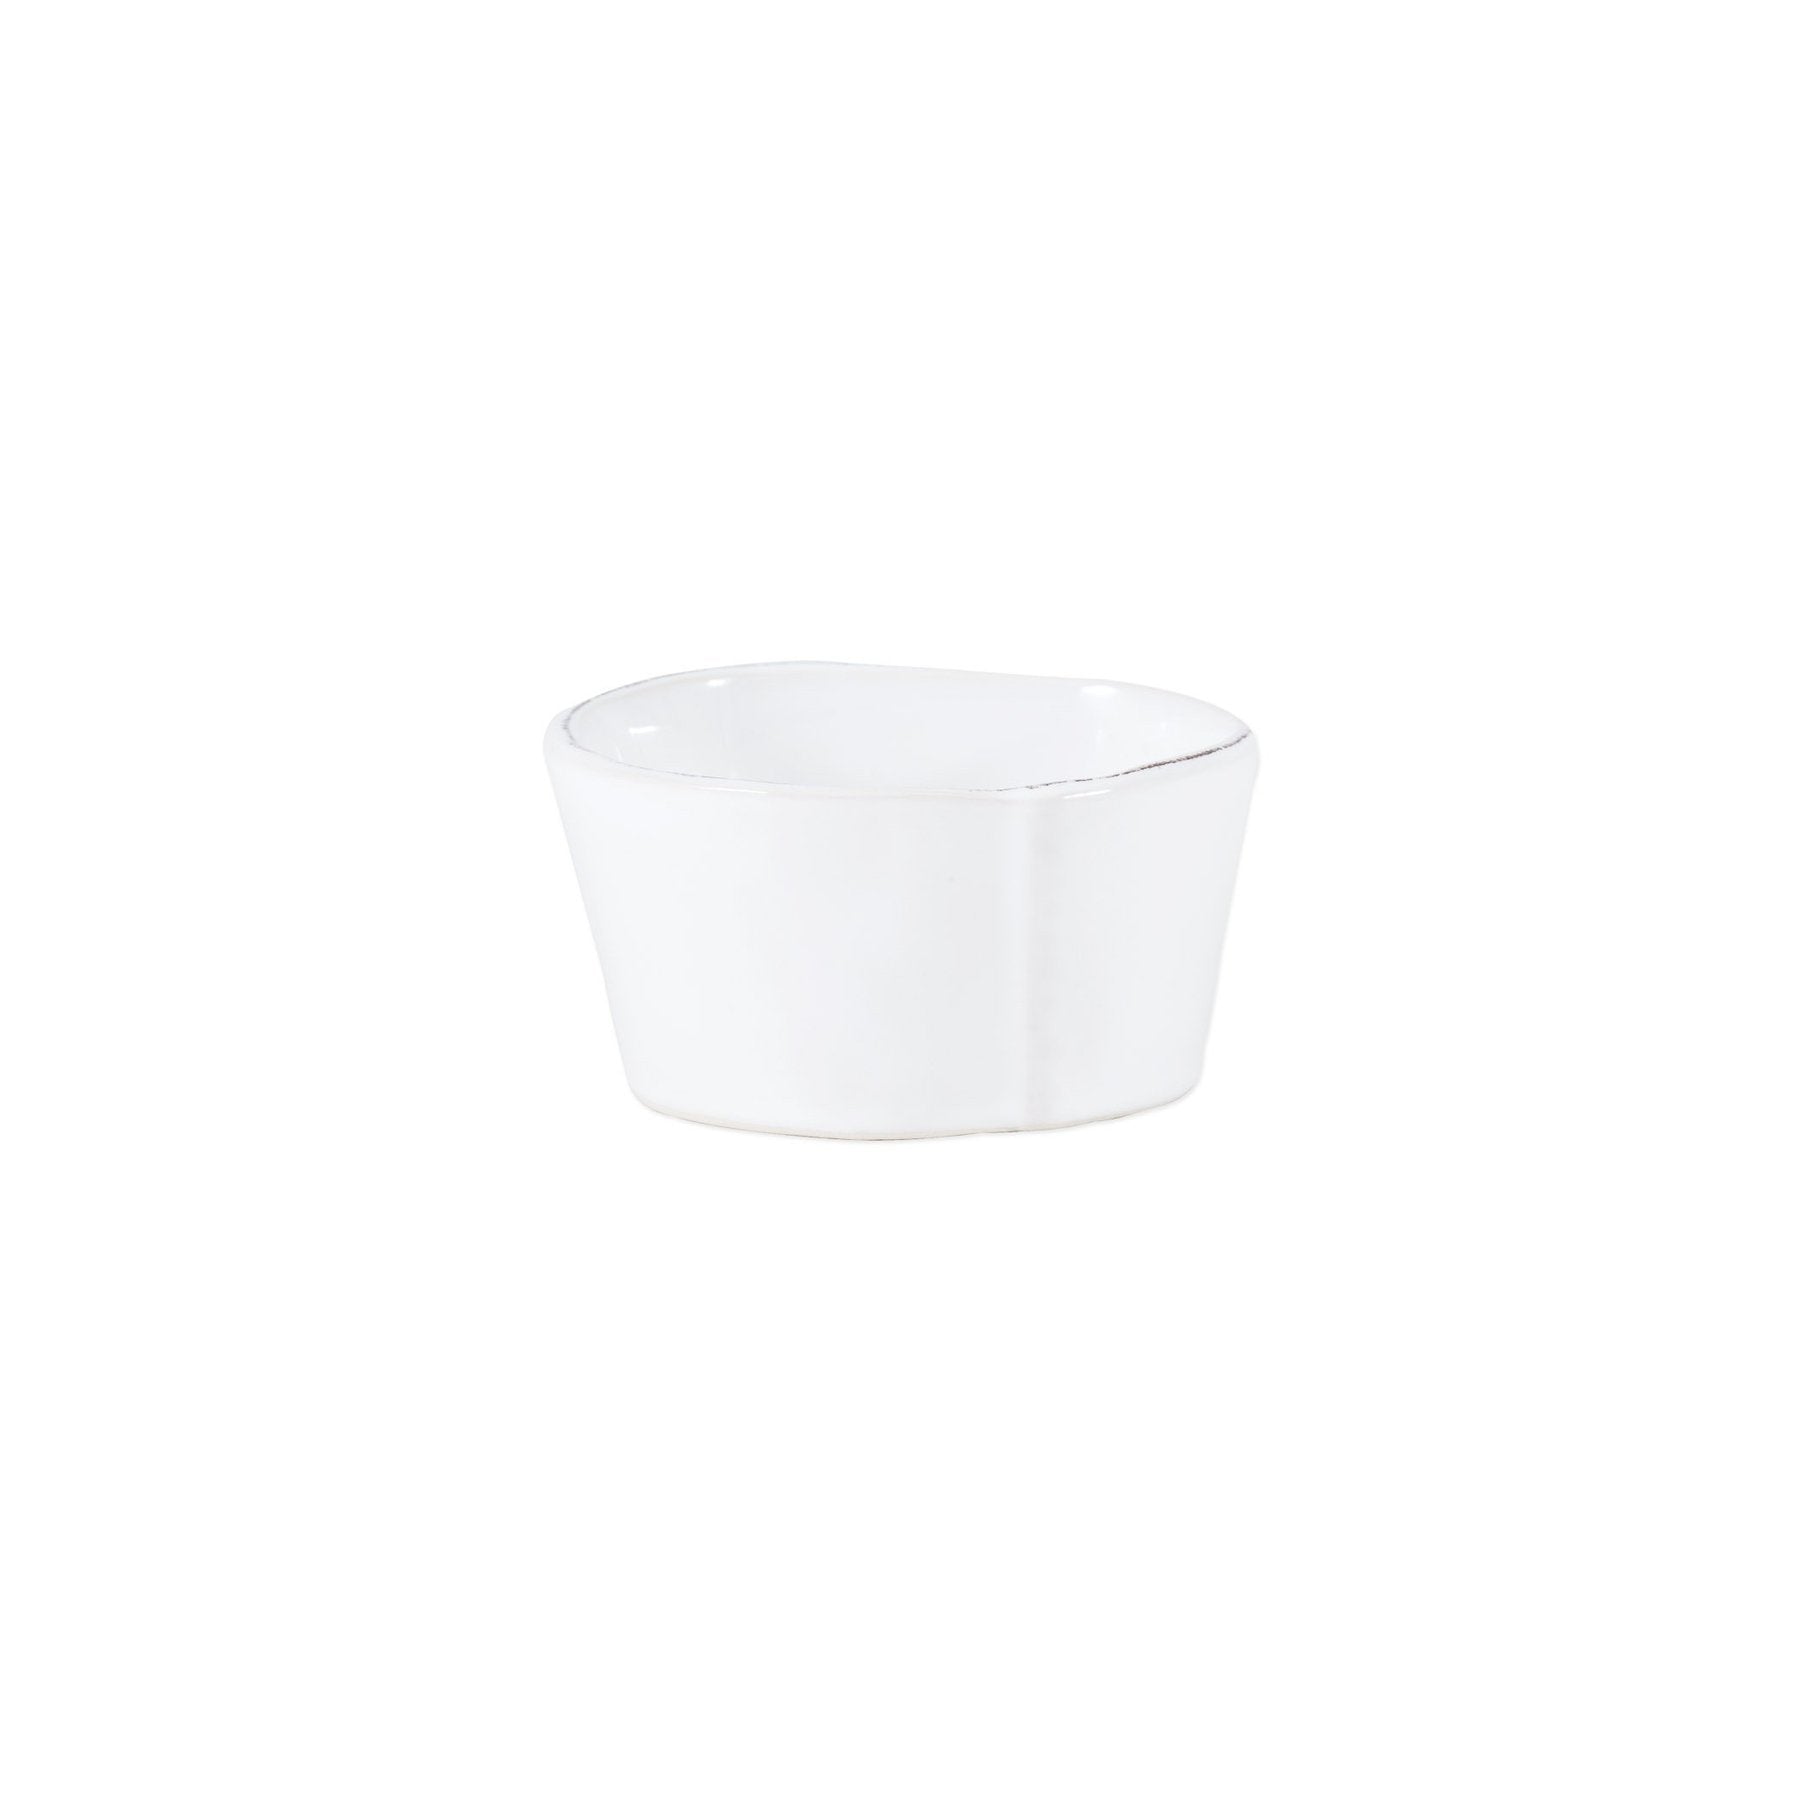 White lastra condiment bowl on a white background.